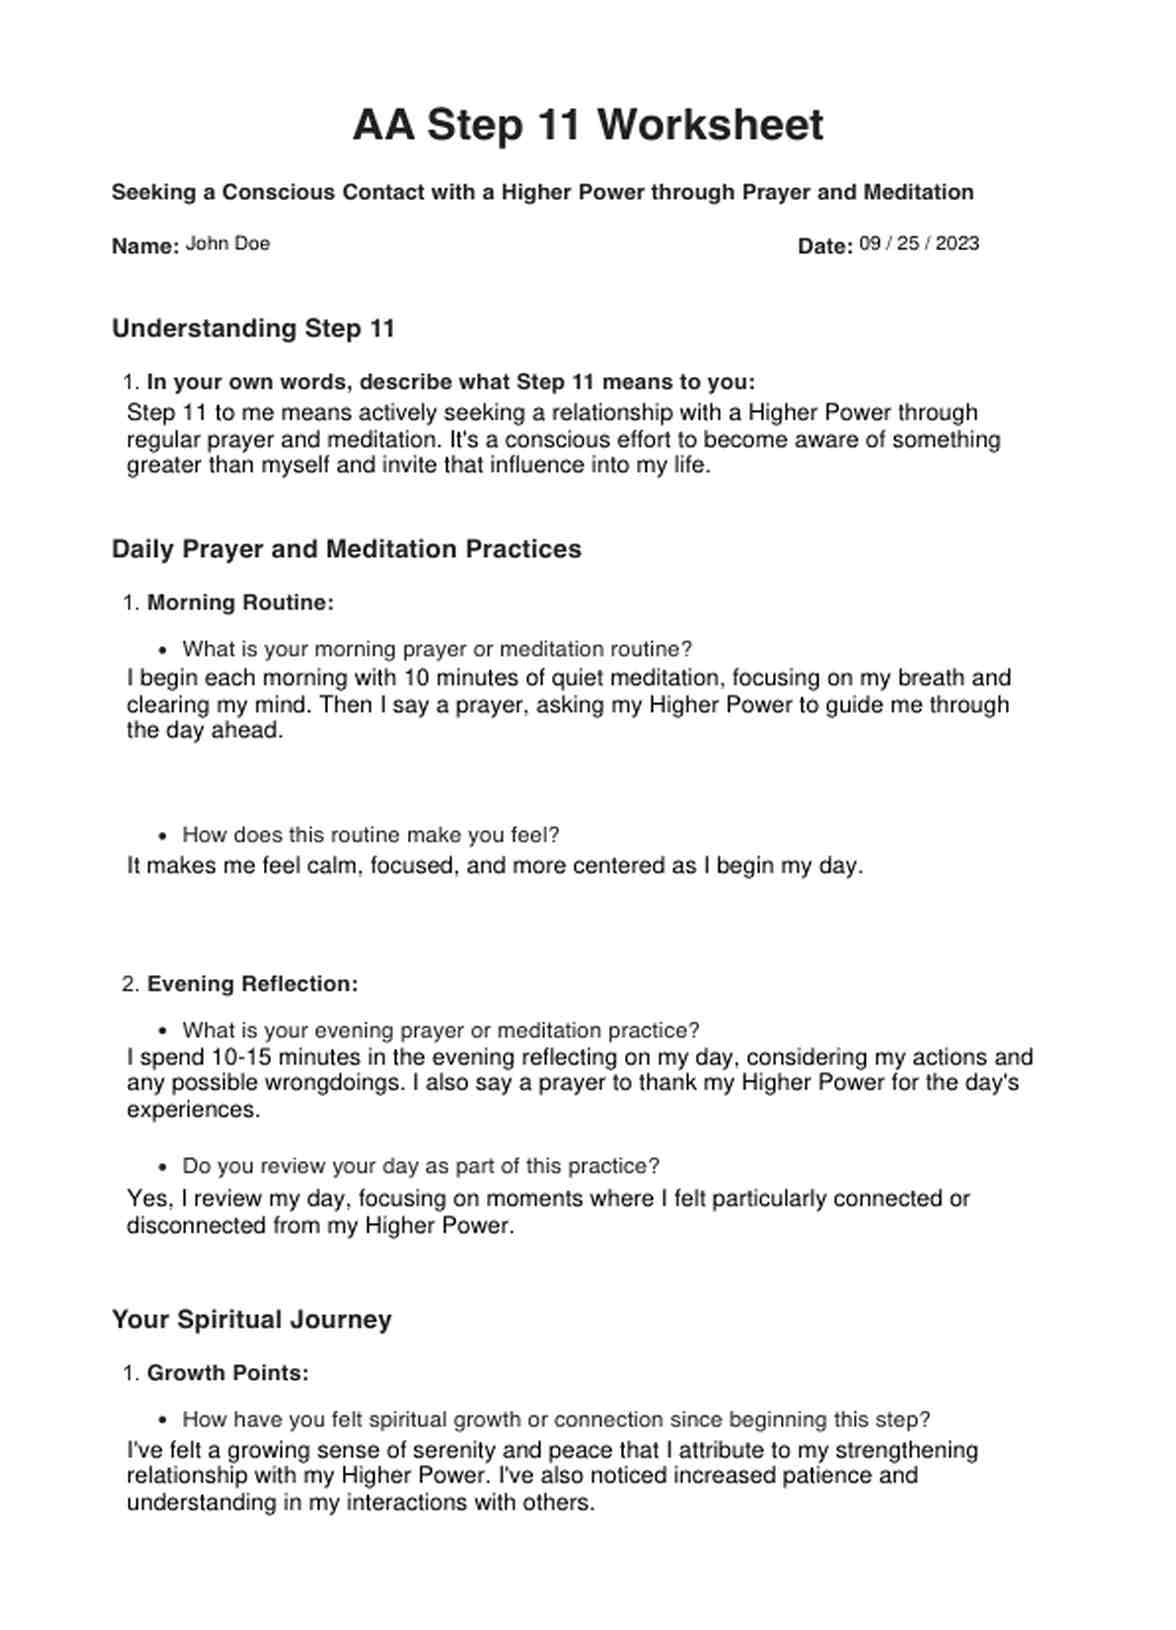 AA Step 11 Worksheets PDF Example